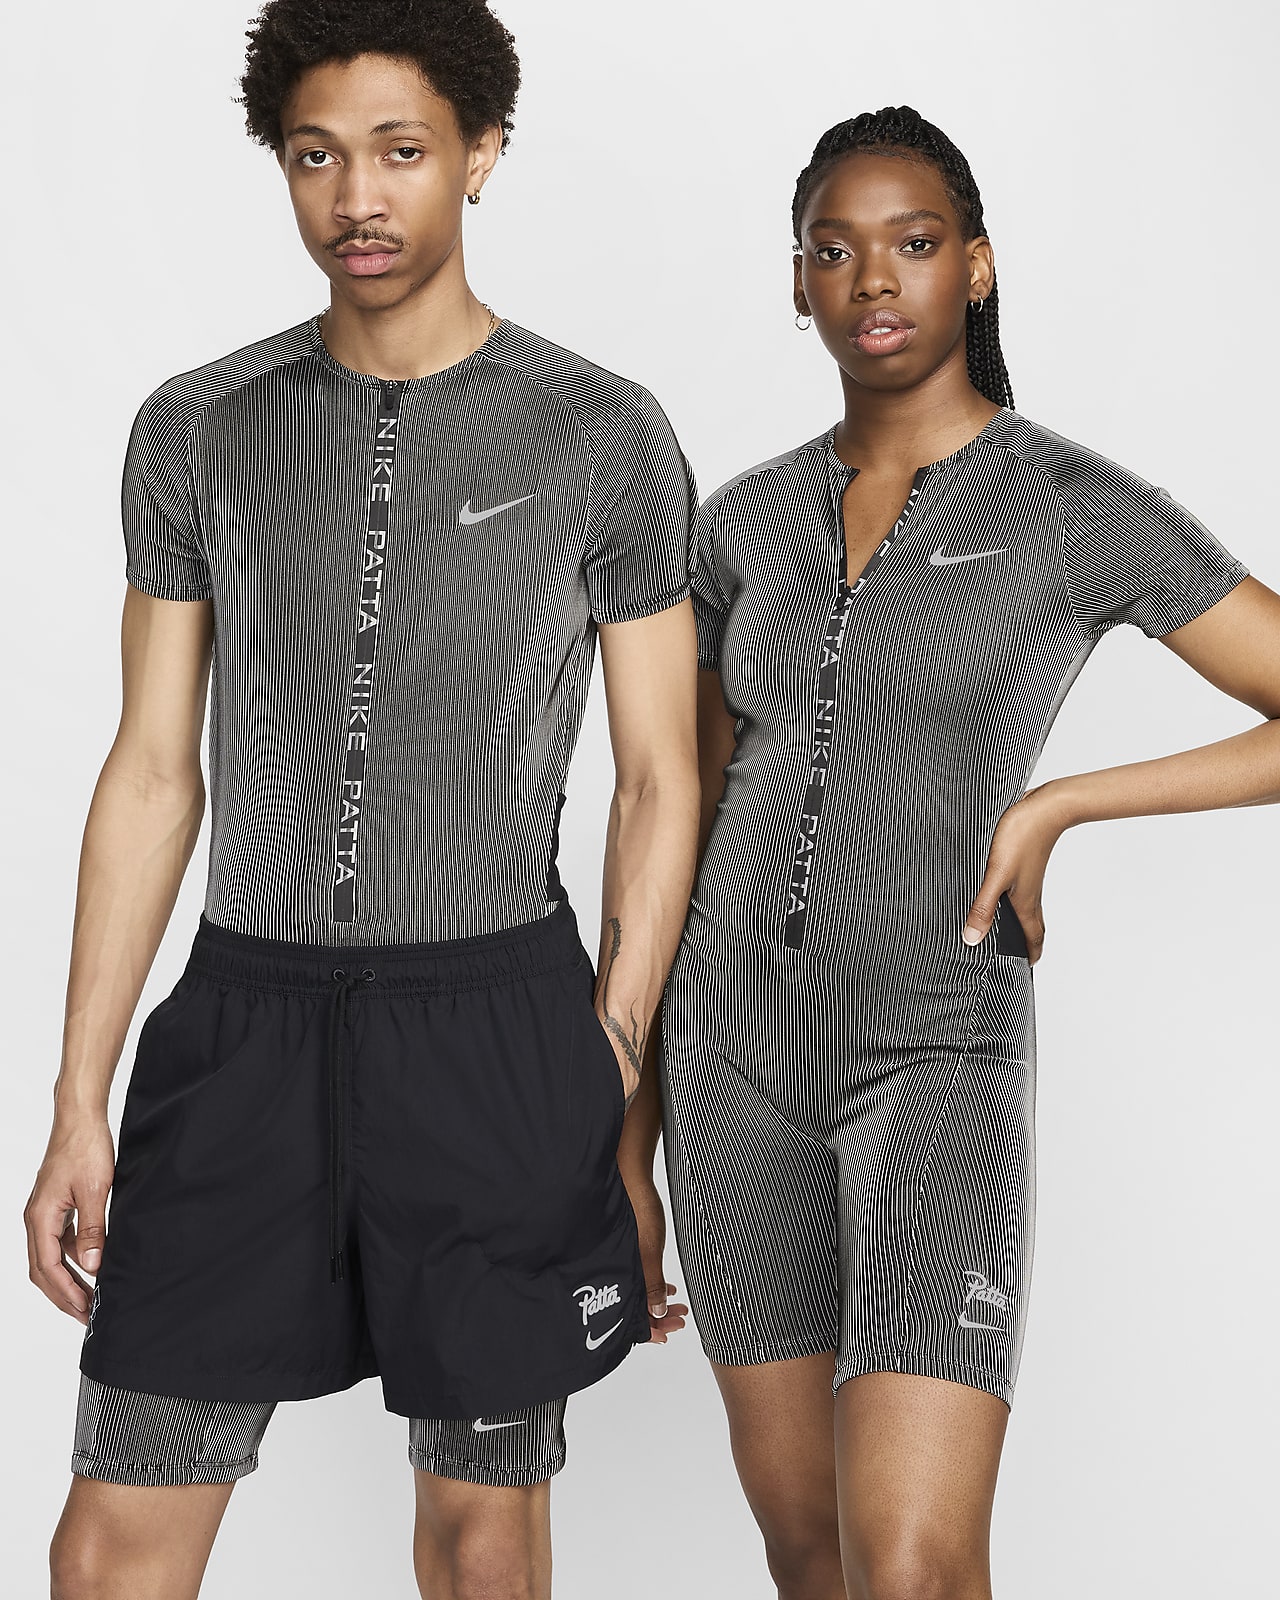 Nike x Patta Running Team wedstrijdtenue